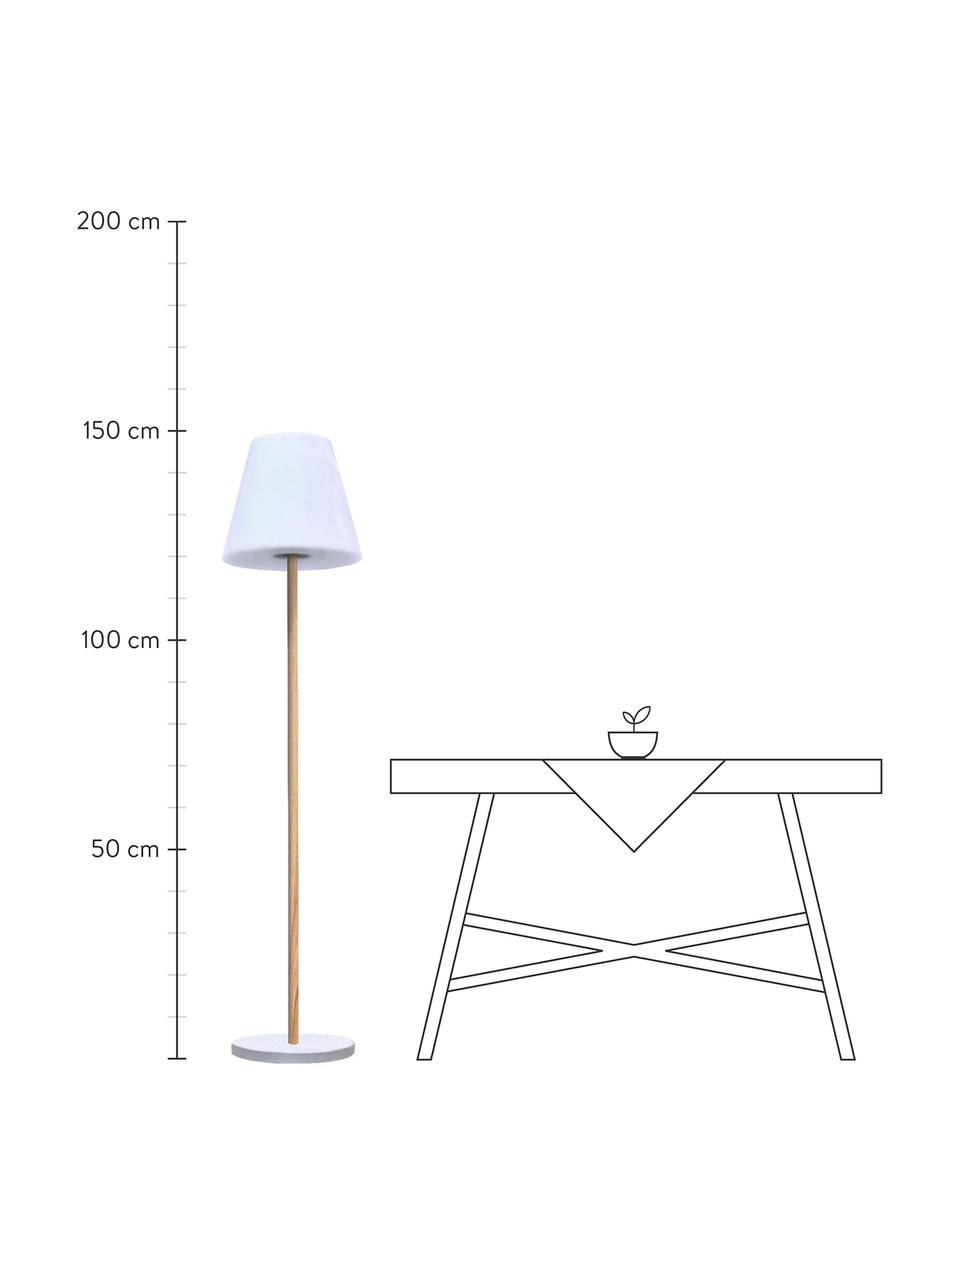 Dimmbare Solar Stehlampe Standby mit Holzfuß, Lampenschirm: Polyethylen, Lampenfuß: Holz, Weiß, Helles Holz, Ø 34 x H 150 cm